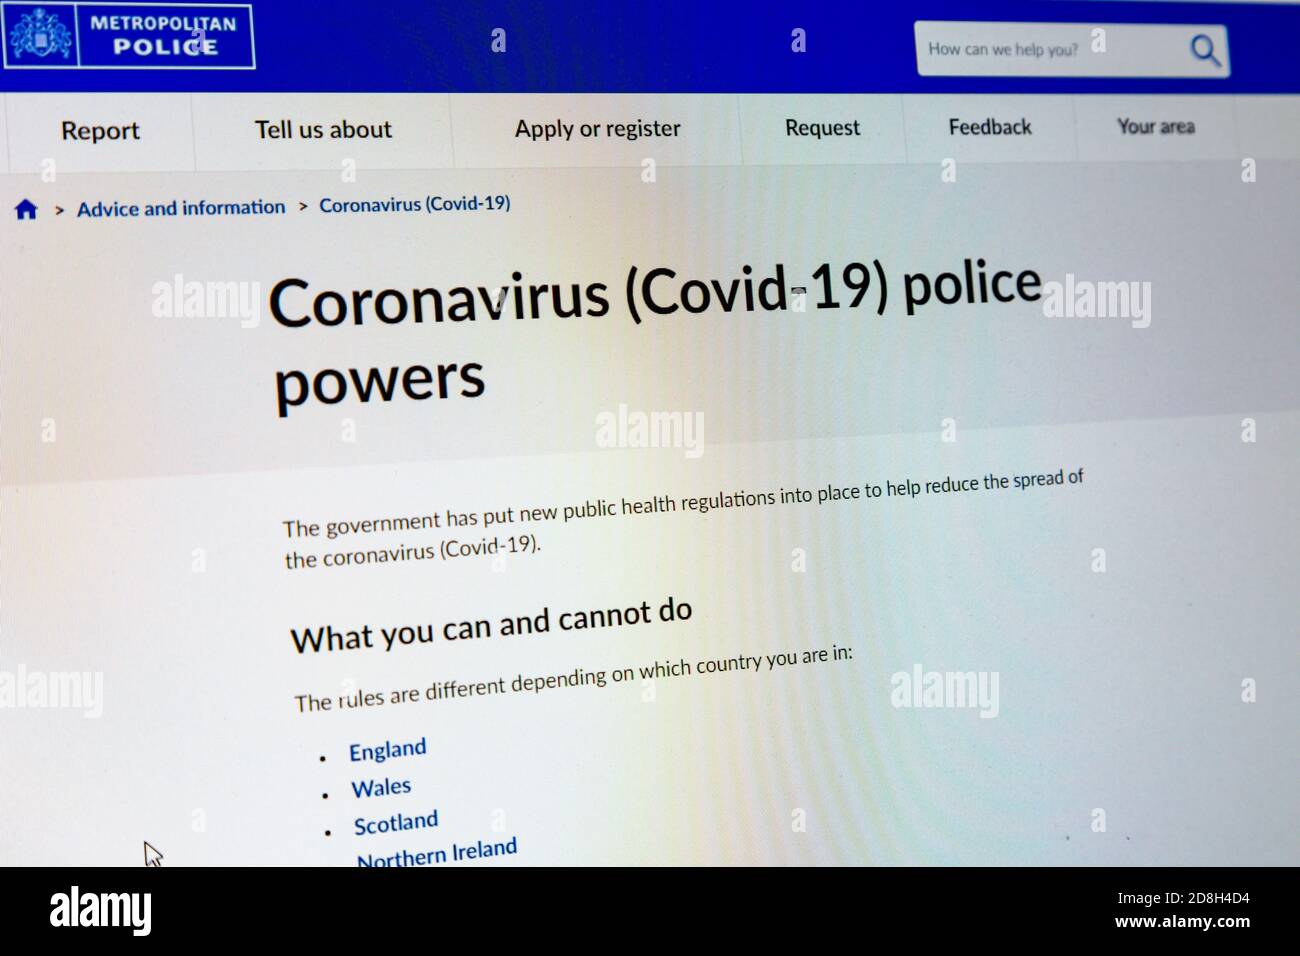 Police website advice - coronavirus police powers Stock Photo